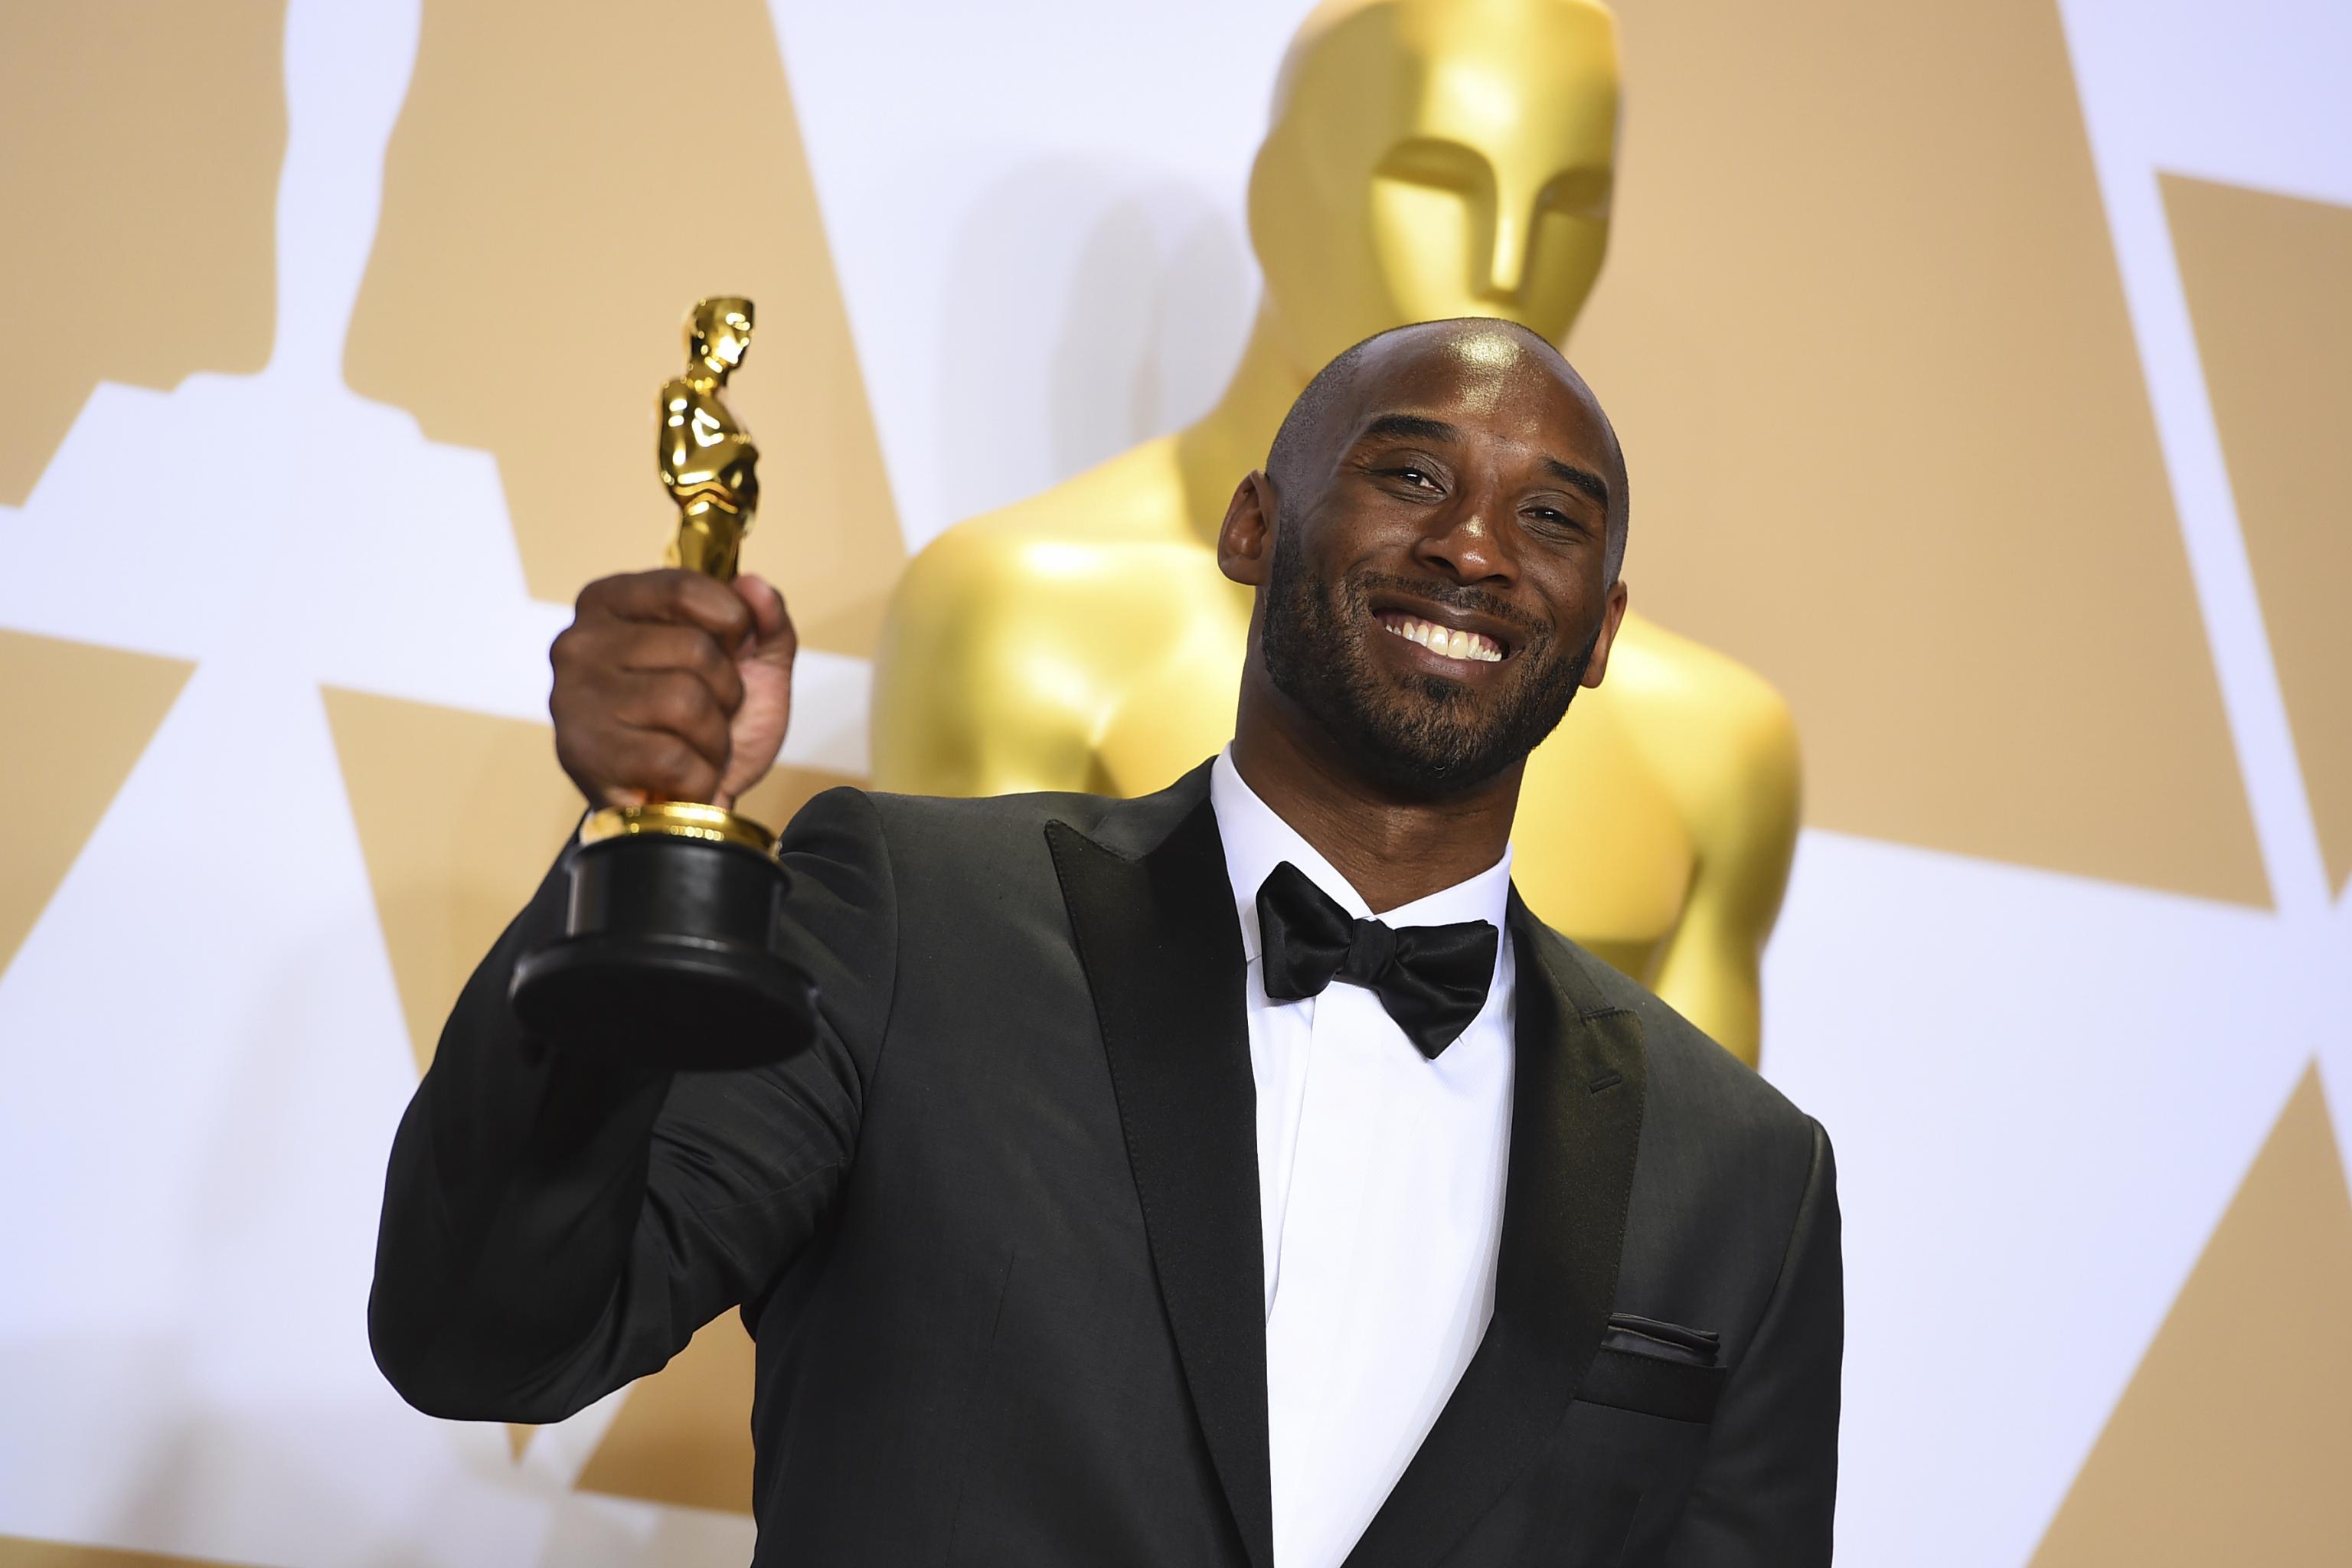 Kobe Bryant Denied Admission to Oscar Academy Despite Winning Award | Bleacher Report | Latest News, Videos and Highlights